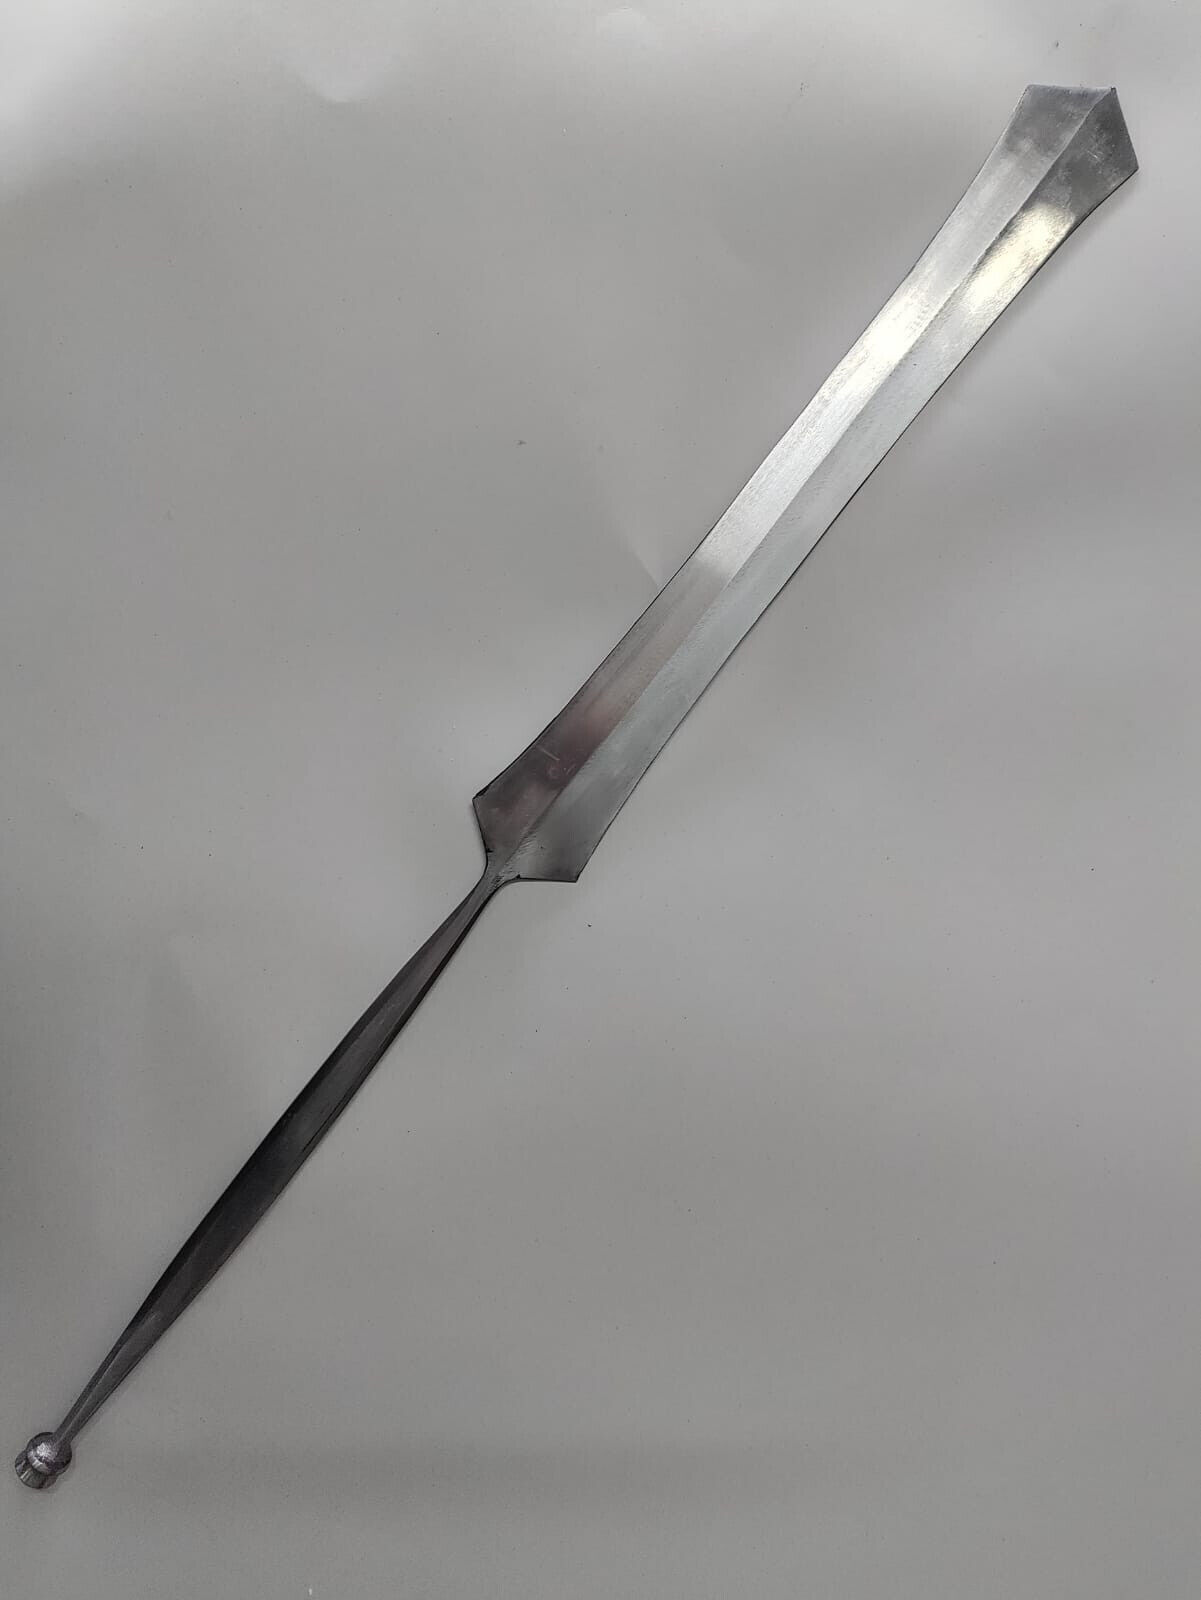 Antique Damascus Spear Dagger Period Piece Rare Old Collectible